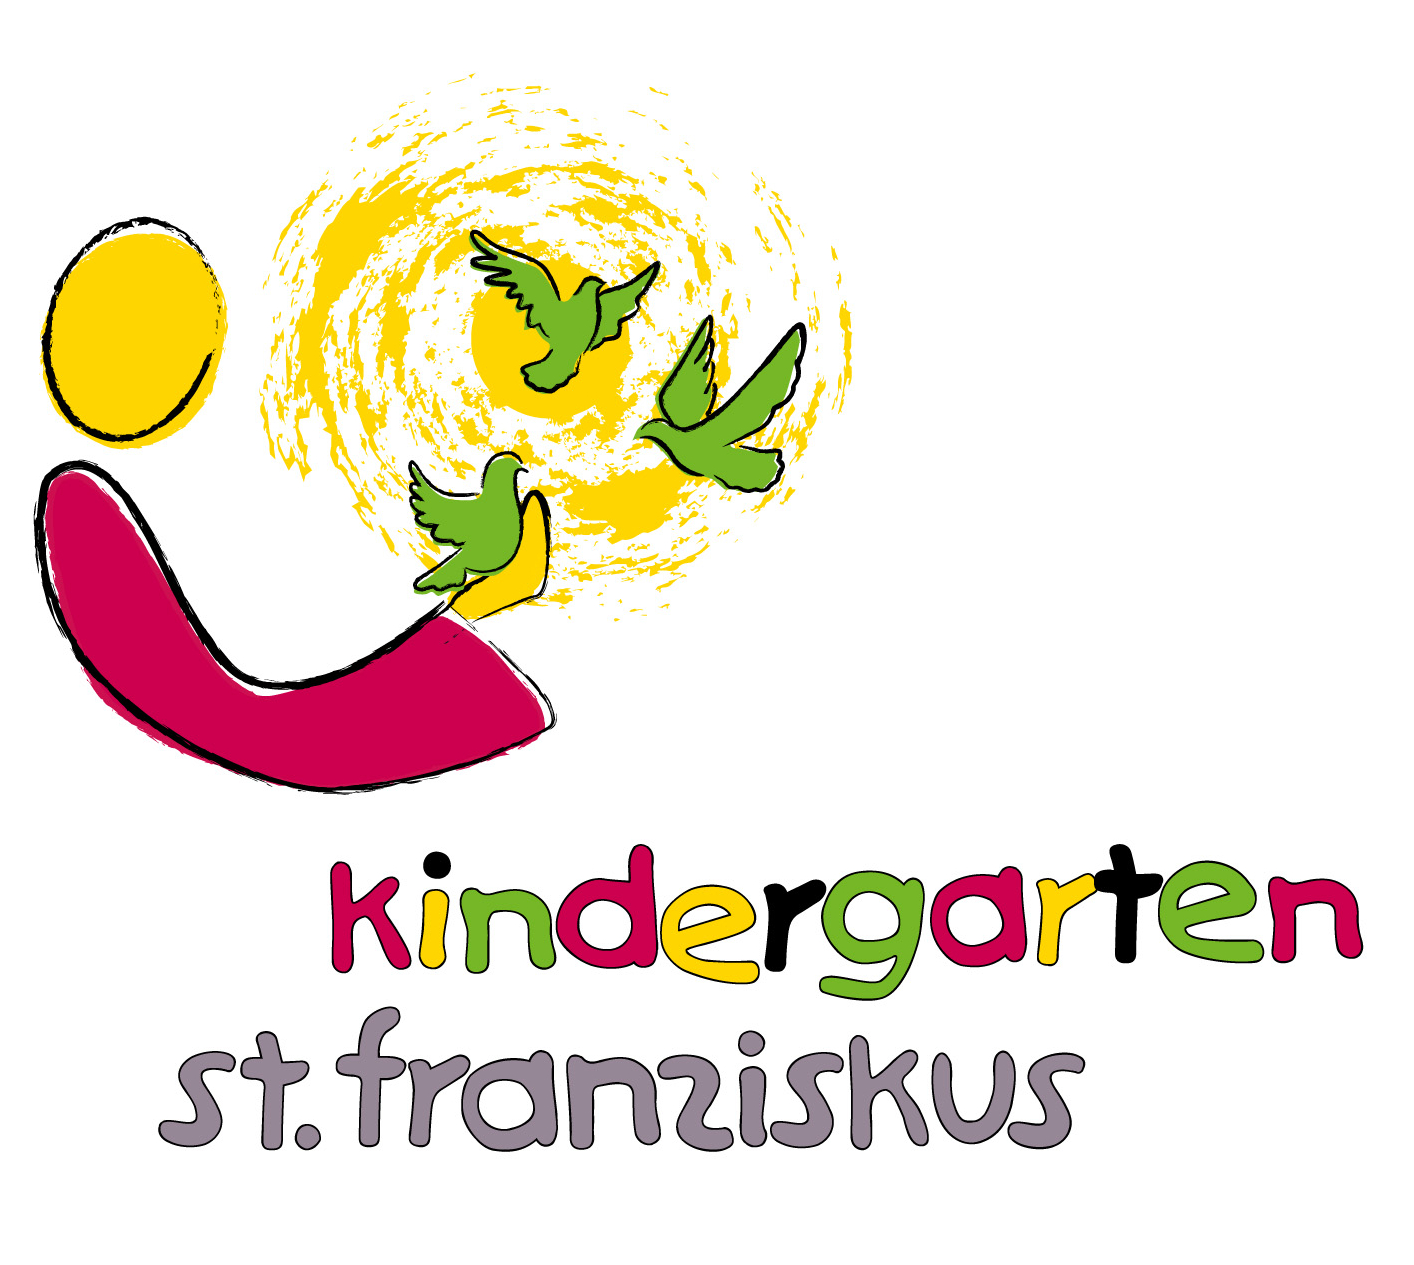 Franziskus-Kindergarten.jpg